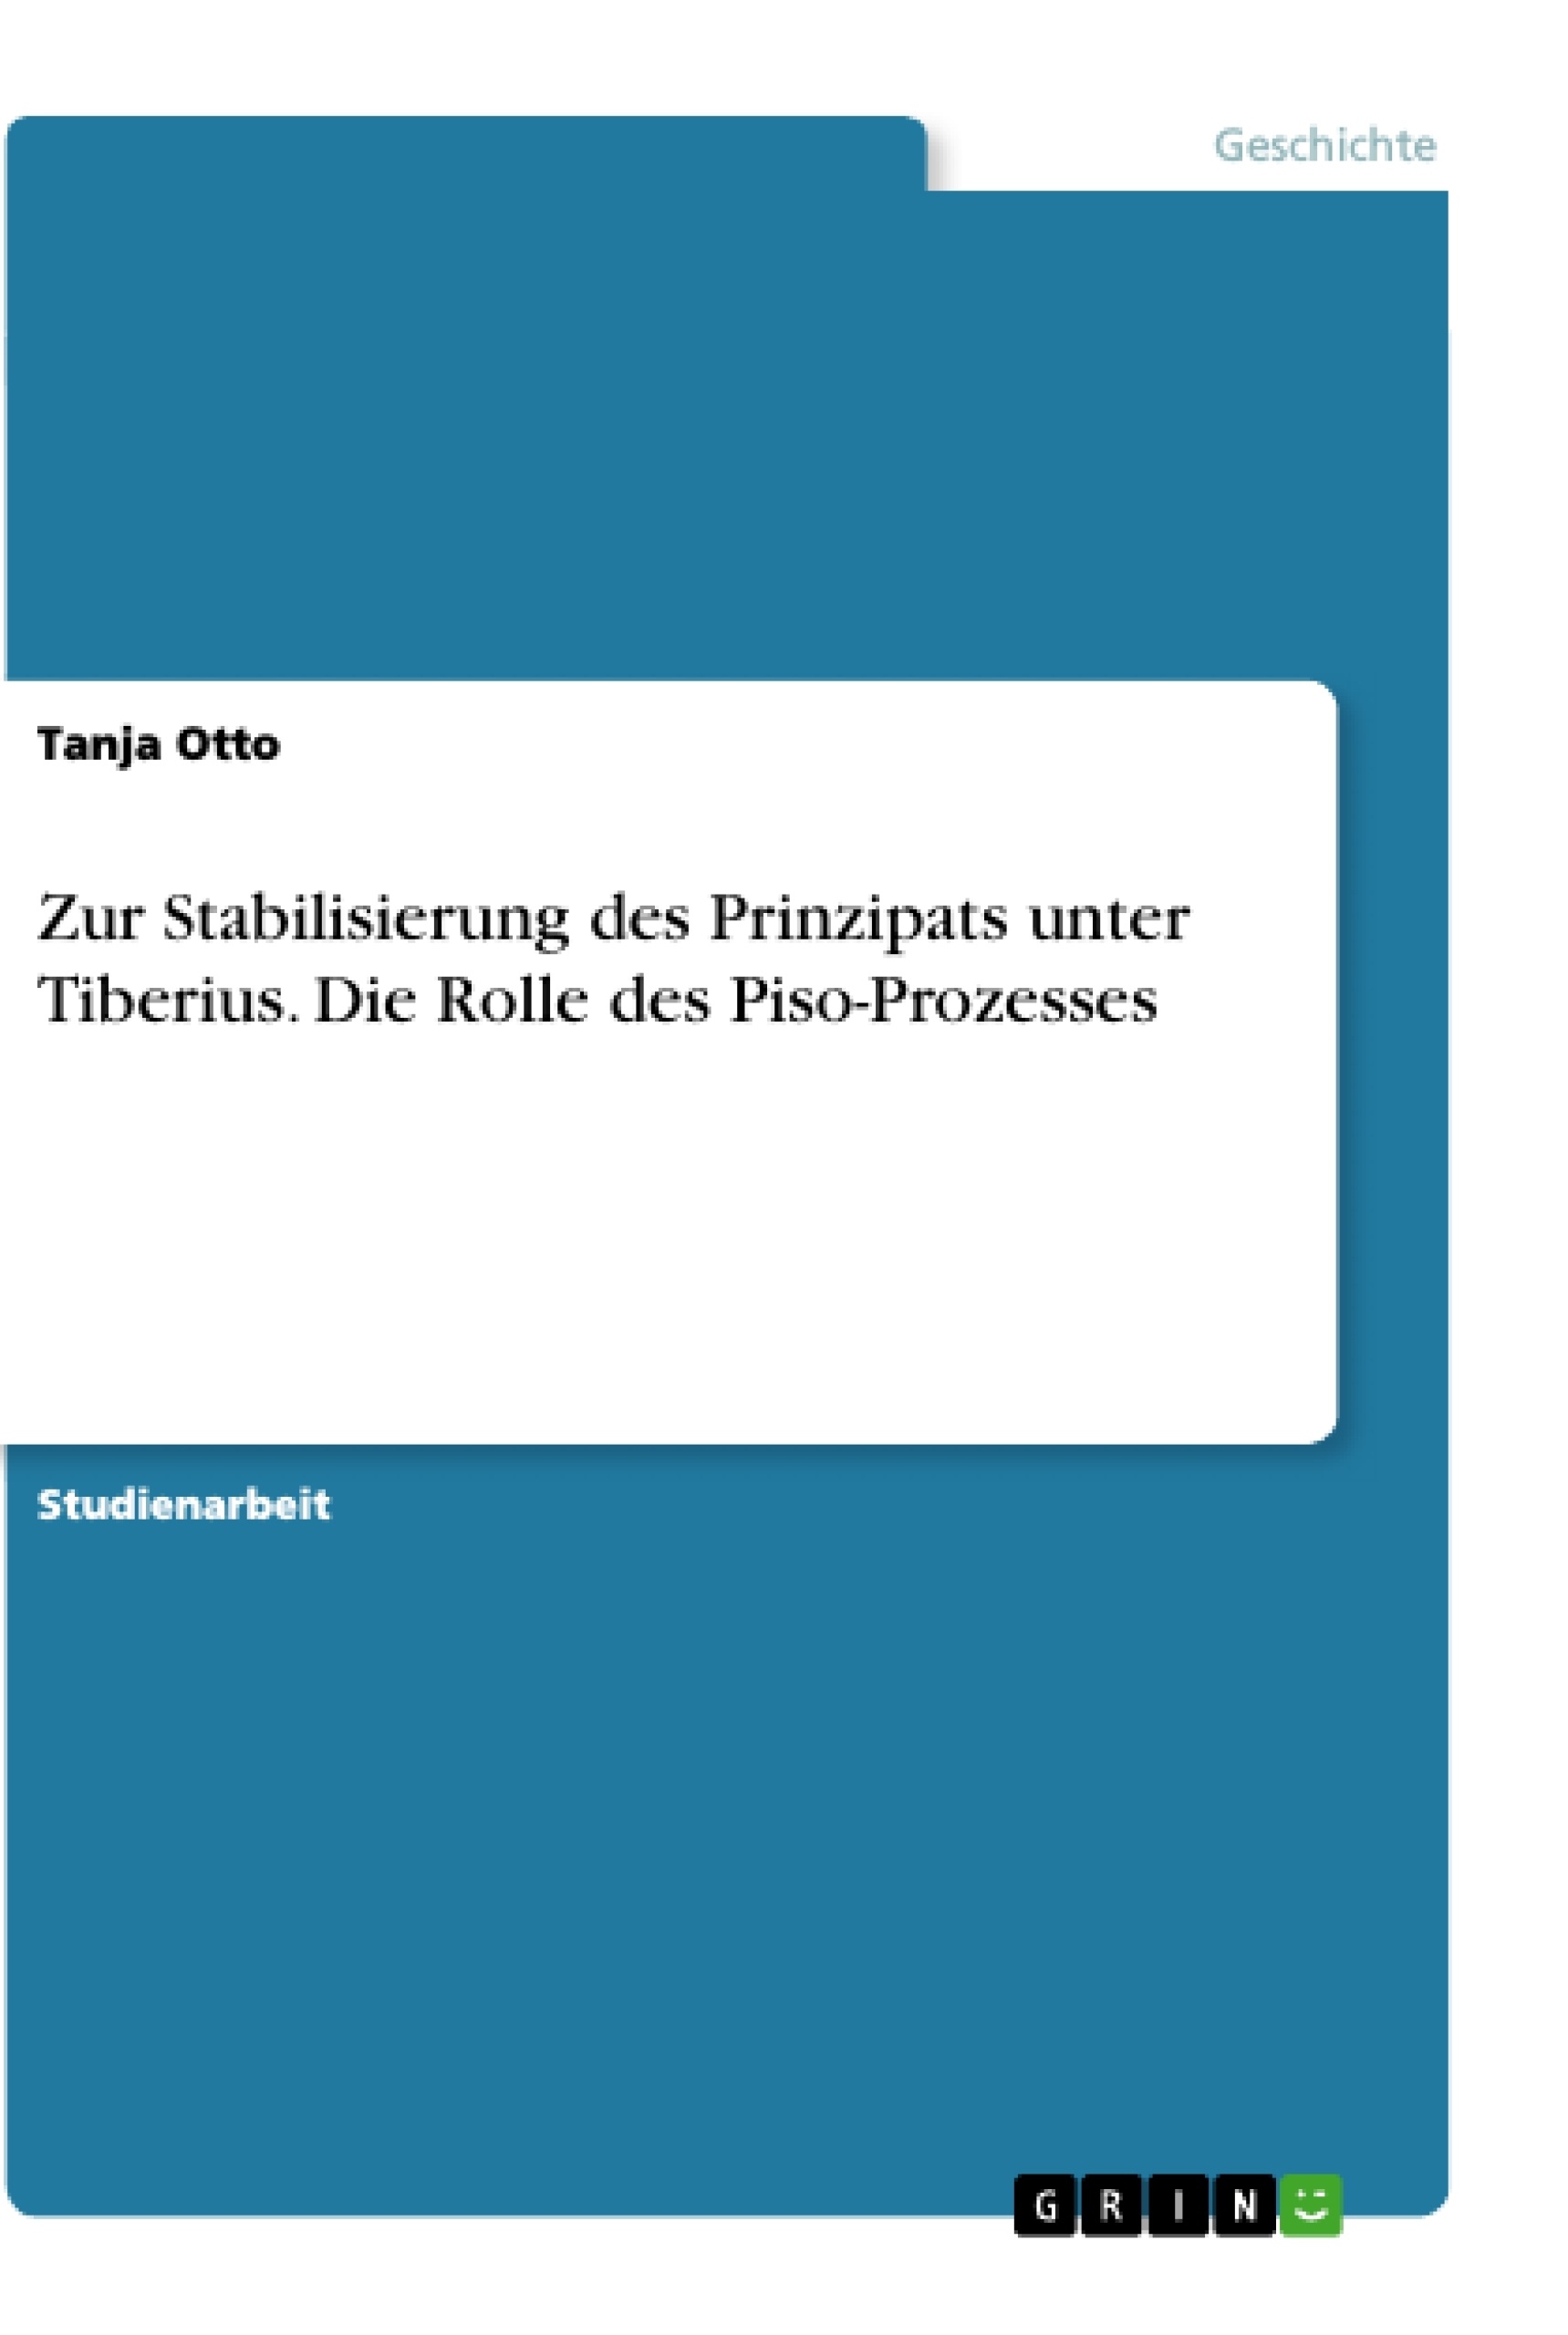 Título: Zur Stabilisierung des Prinzipats unter Tiberius. Die Rolle des Piso-Prozesses